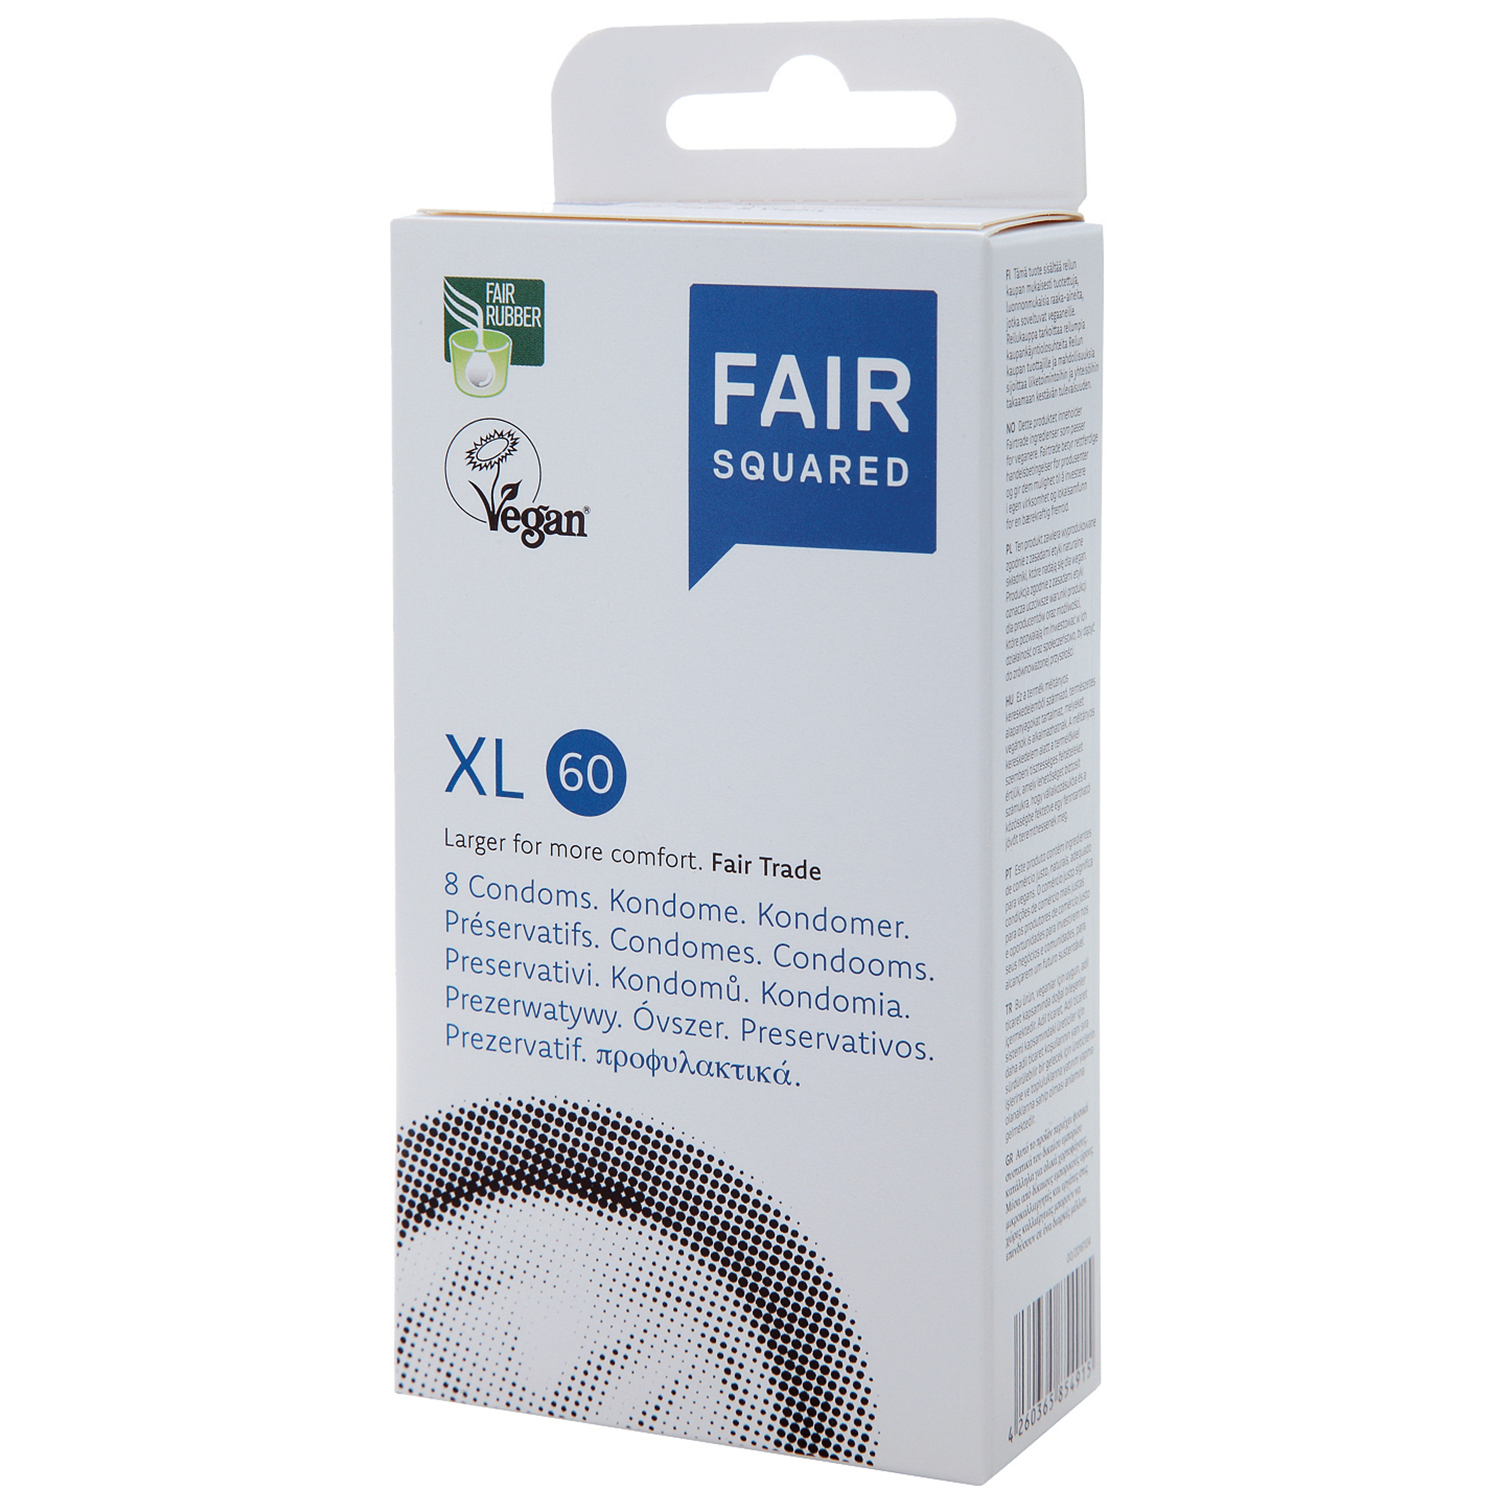 Fair Squared XL 60 Veganska Kondomer 8 st  - Klar